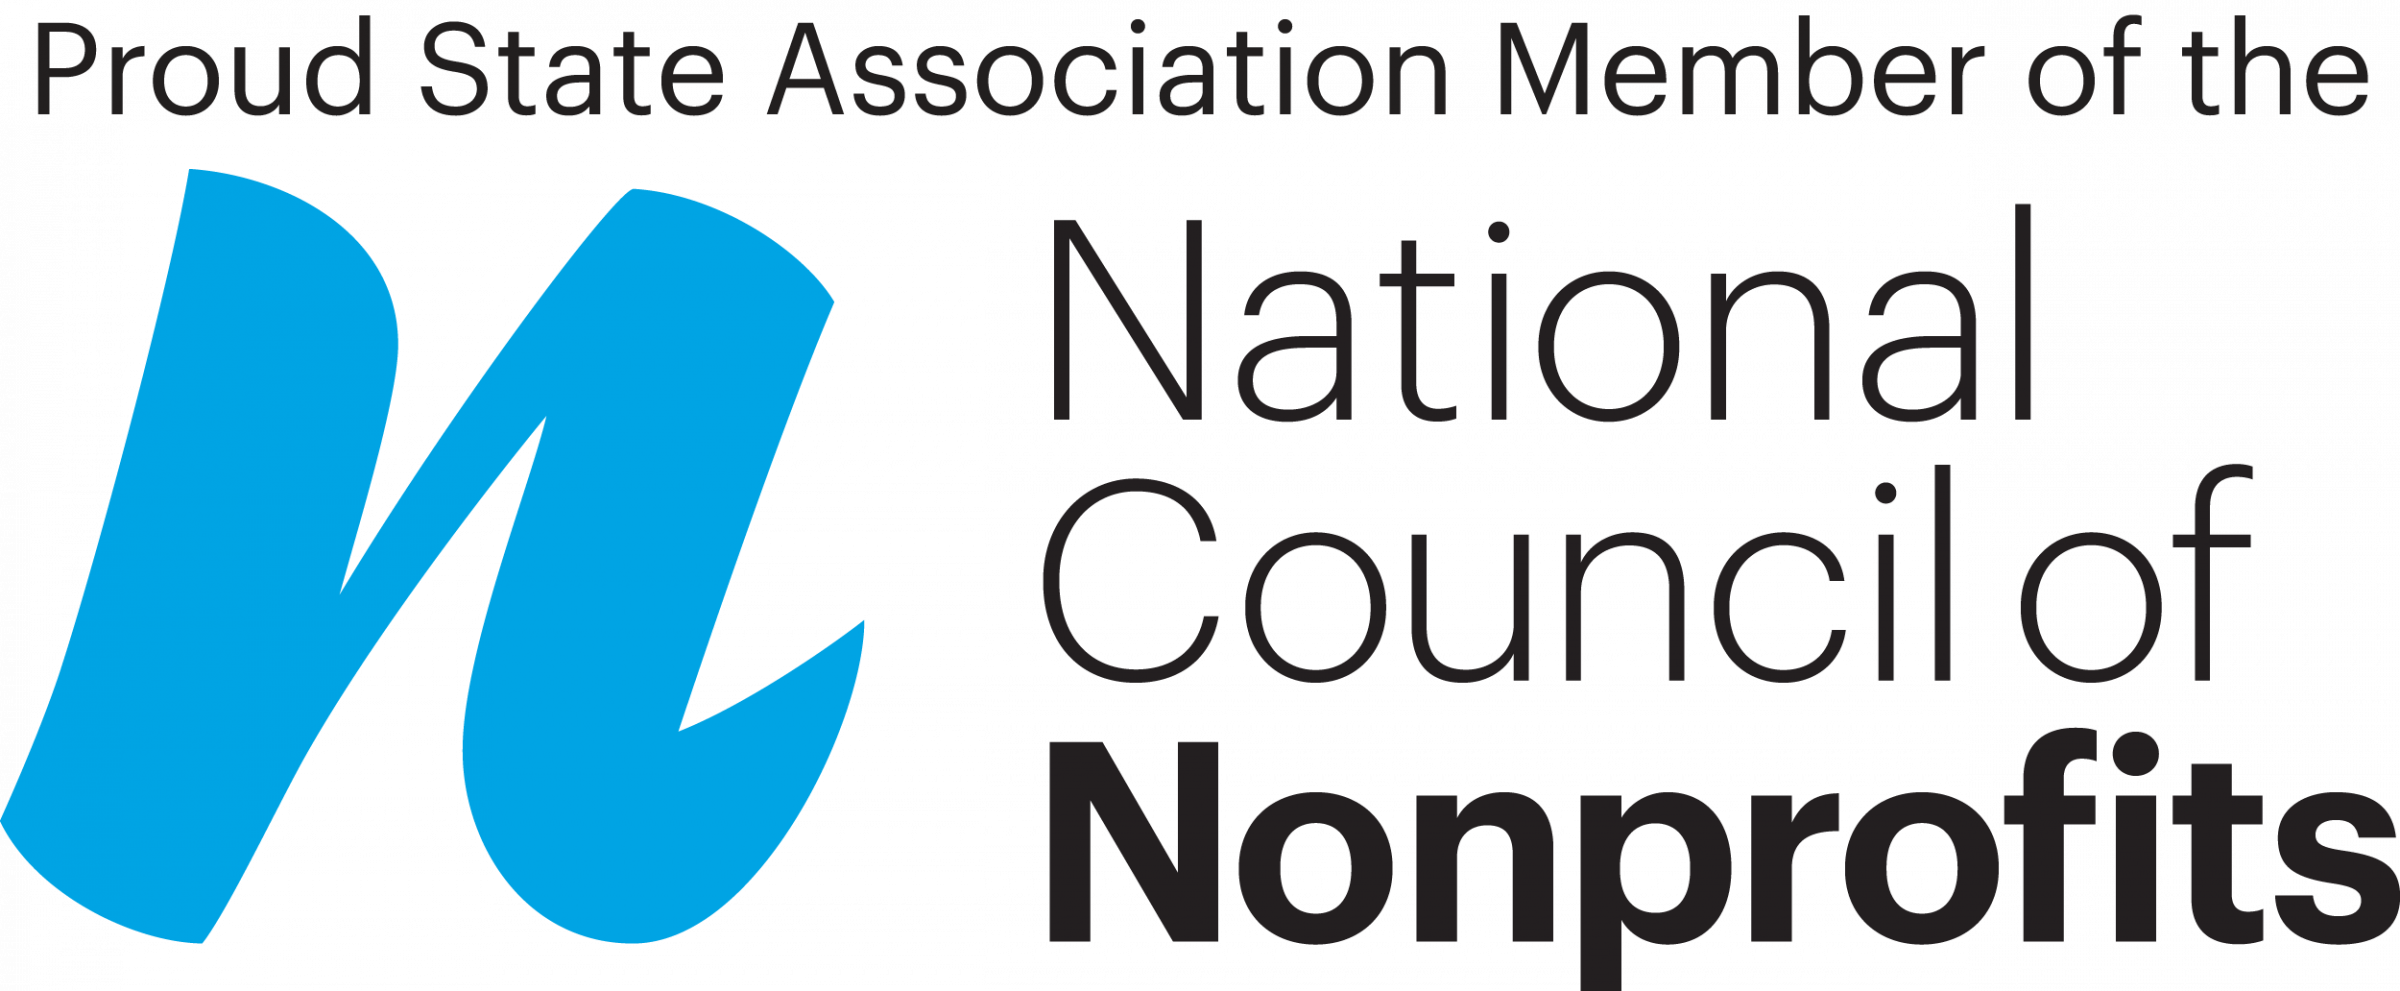 Proud State Association Member Logo.png